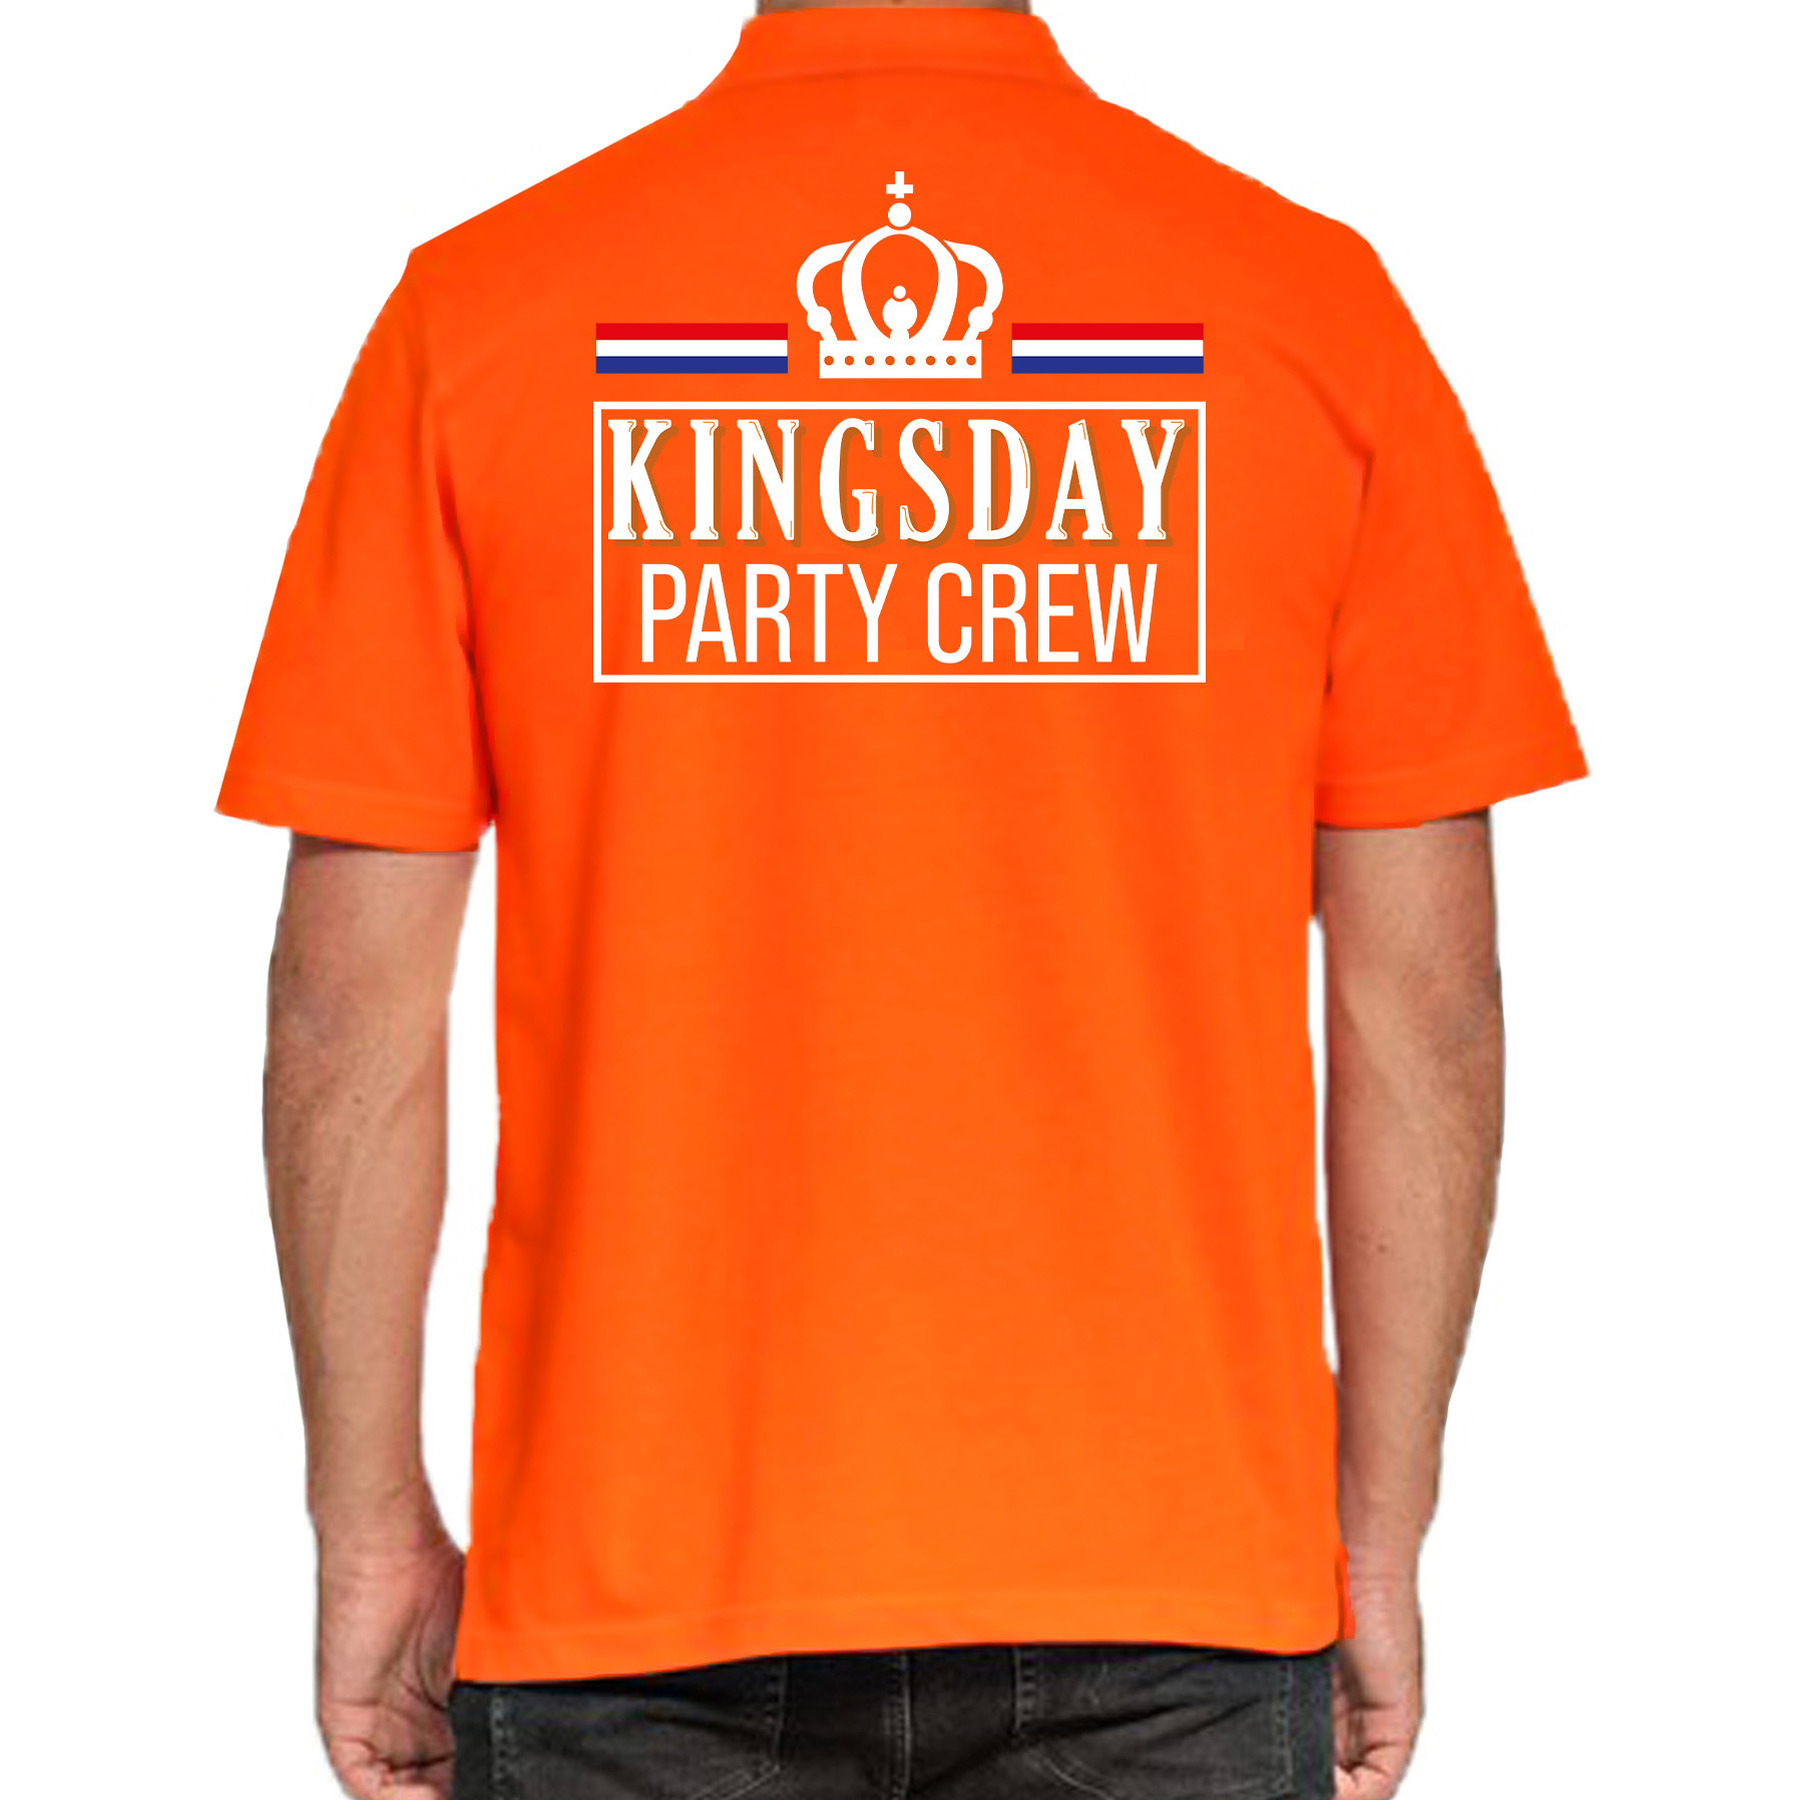 Kingsday party crew polo shirt oranje voor heren Koningsdag polo shirts